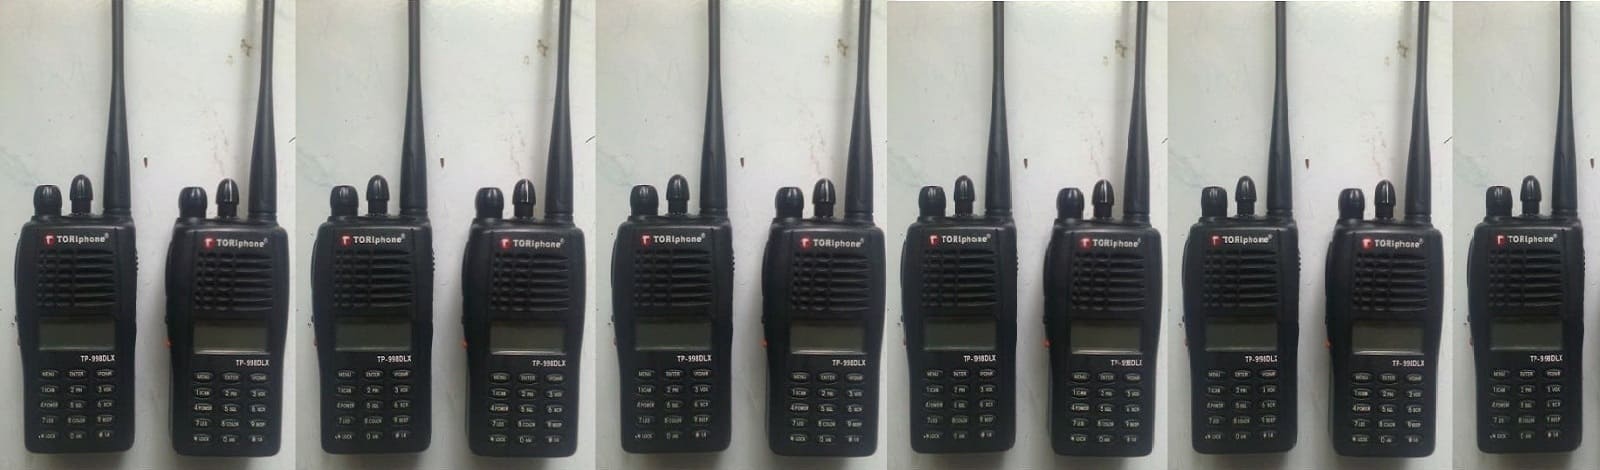 HT Toriphone TP 98 DLX | Sewa HT Pasir Putih, Depok, Jawa Barat | Rental Handy Talky Depok Murah